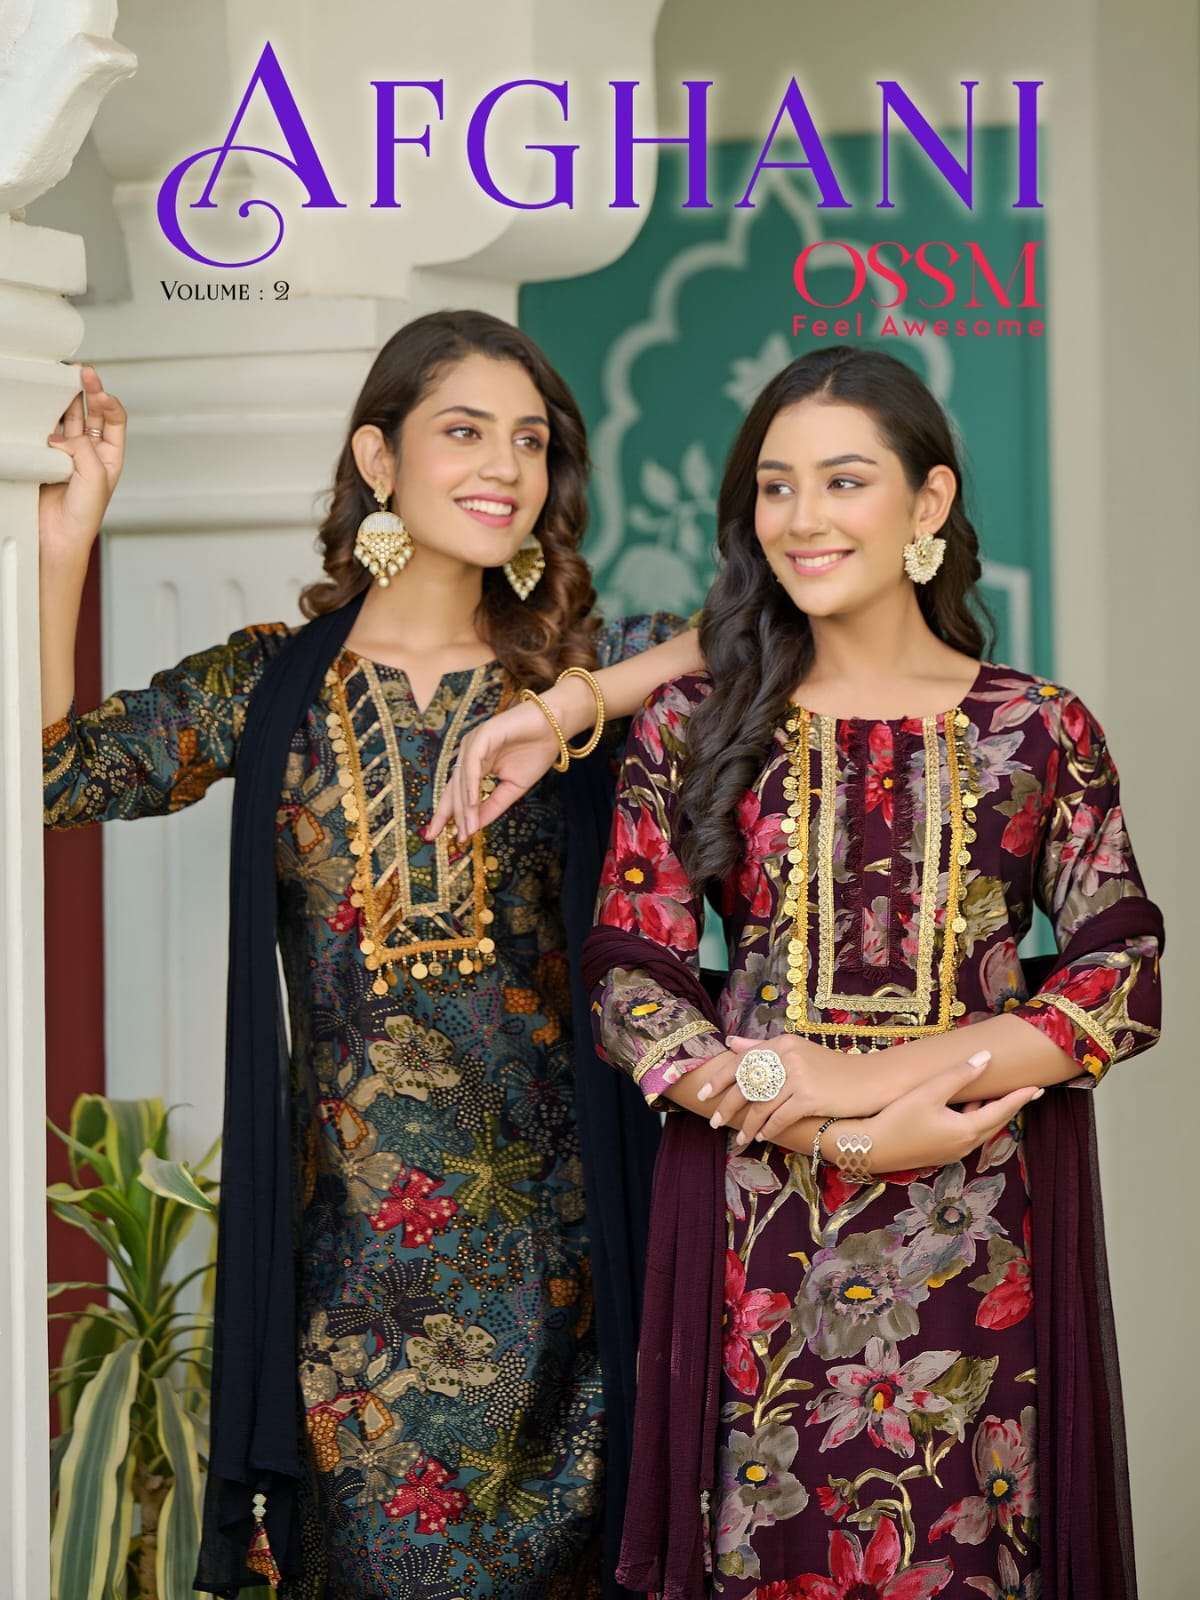 Ossm afghani vol 2 series 201-206 Premium Chanderi Modal Foil readymade suit